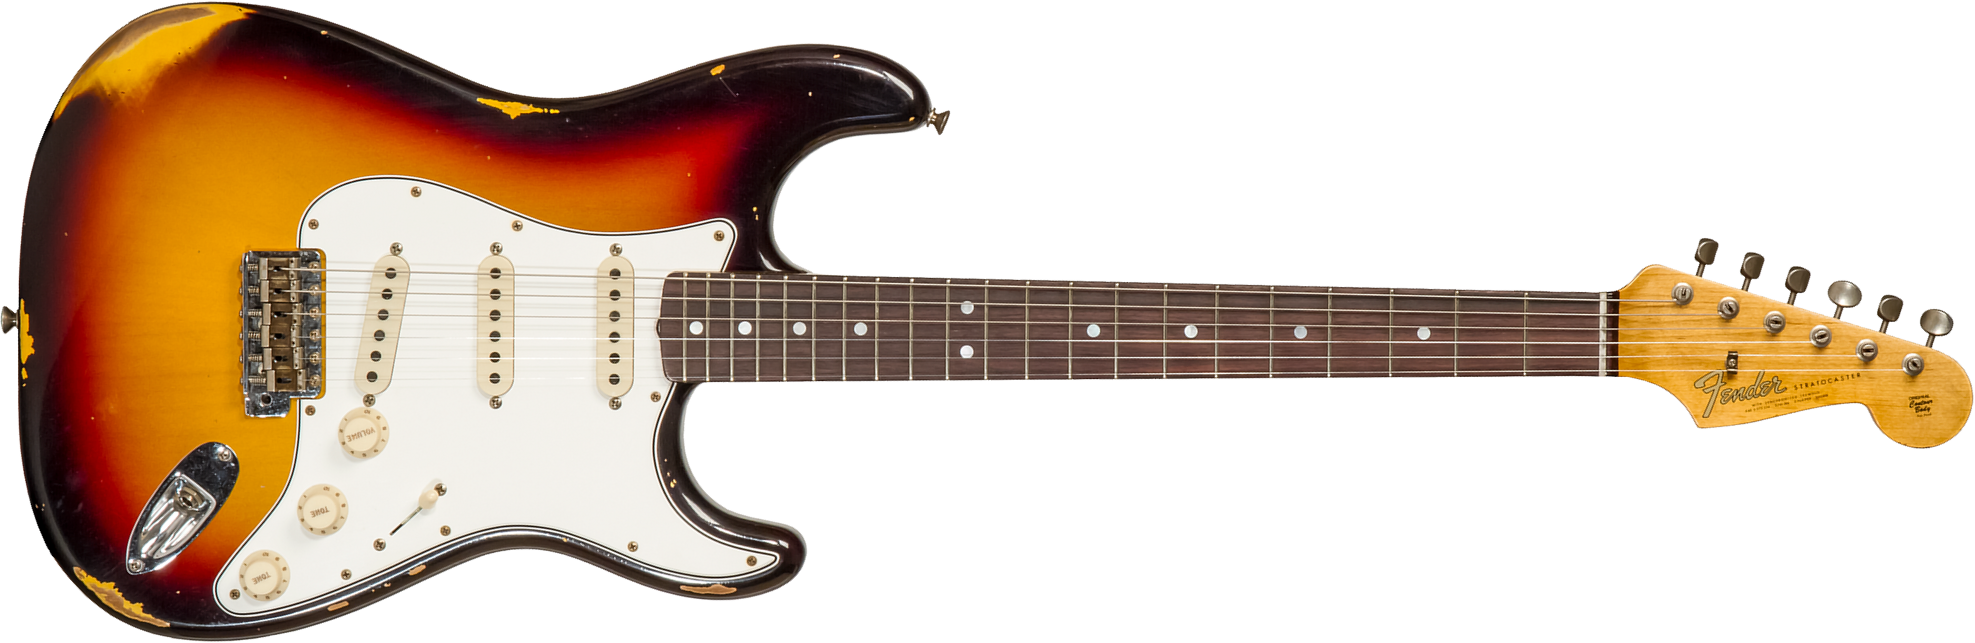 Fender Custom Shop Strat Late 1964 3s Trem Rw #cz569925 - Relic Target 3-color Sunburst - Elektrische gitaar in Str-vorm - Main picture